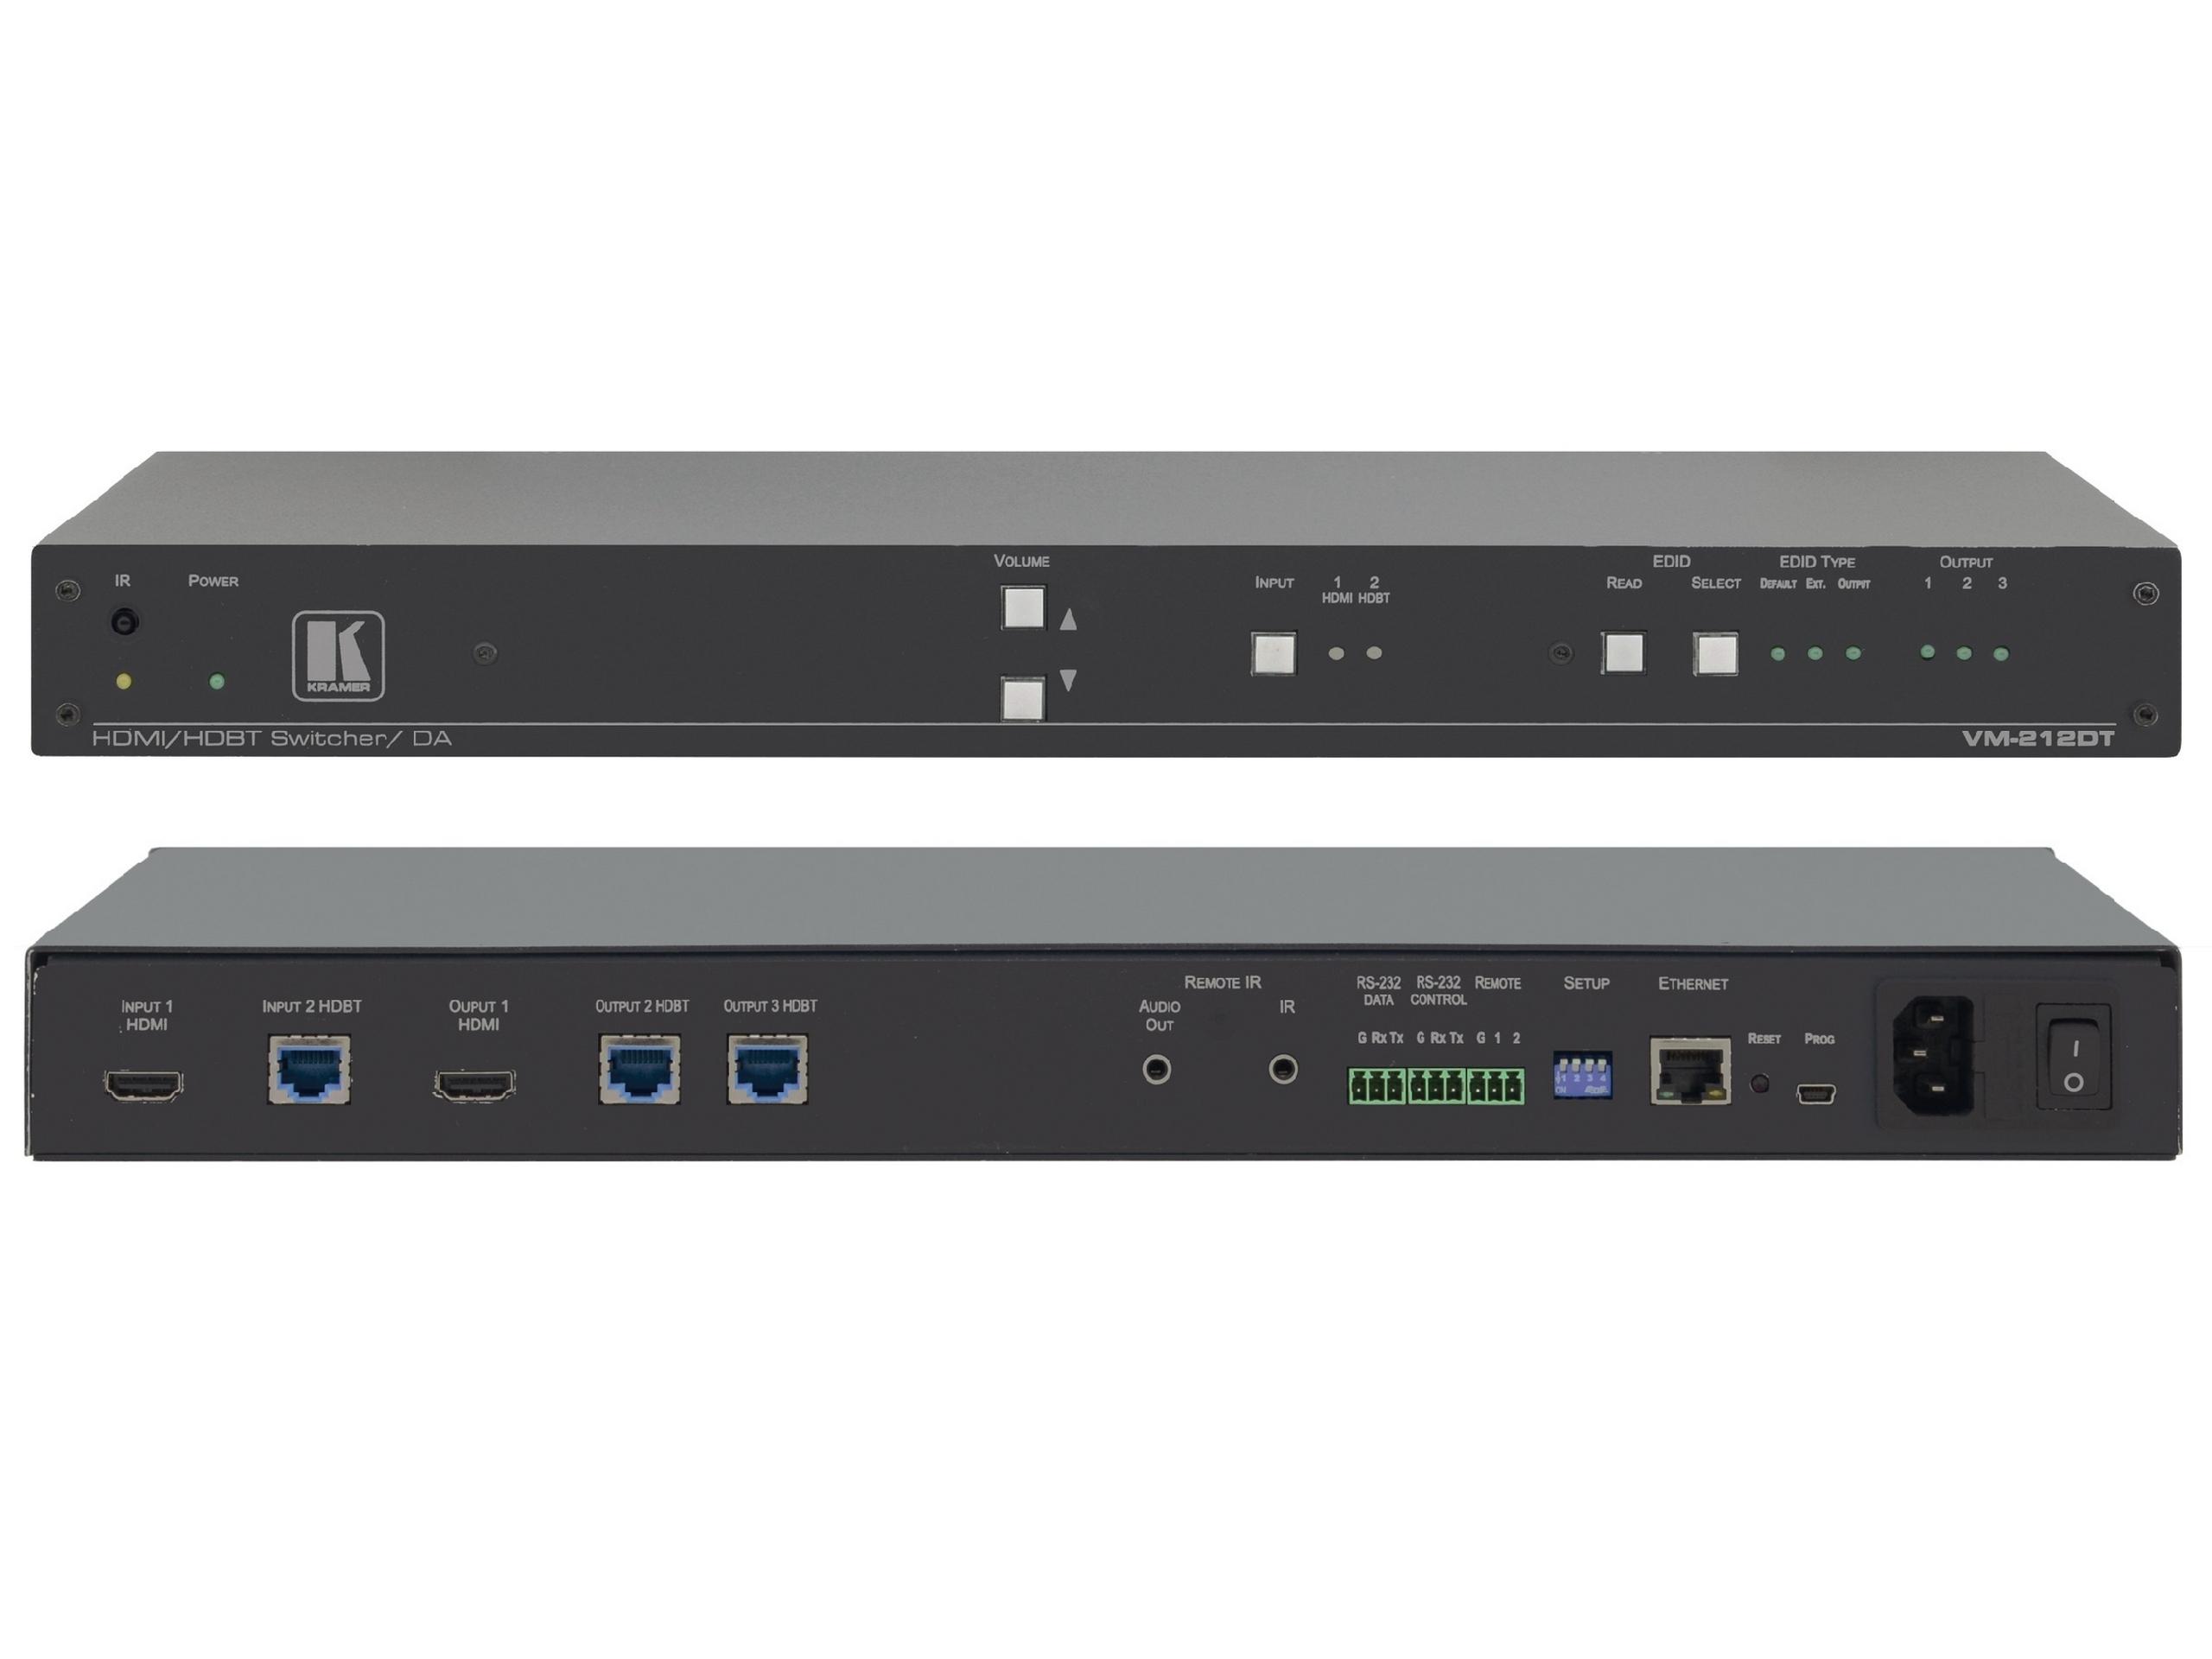 Kramer VM-212DT 2x1 2 4K UHD HDMI and HDBaseT Distribution Amplifier